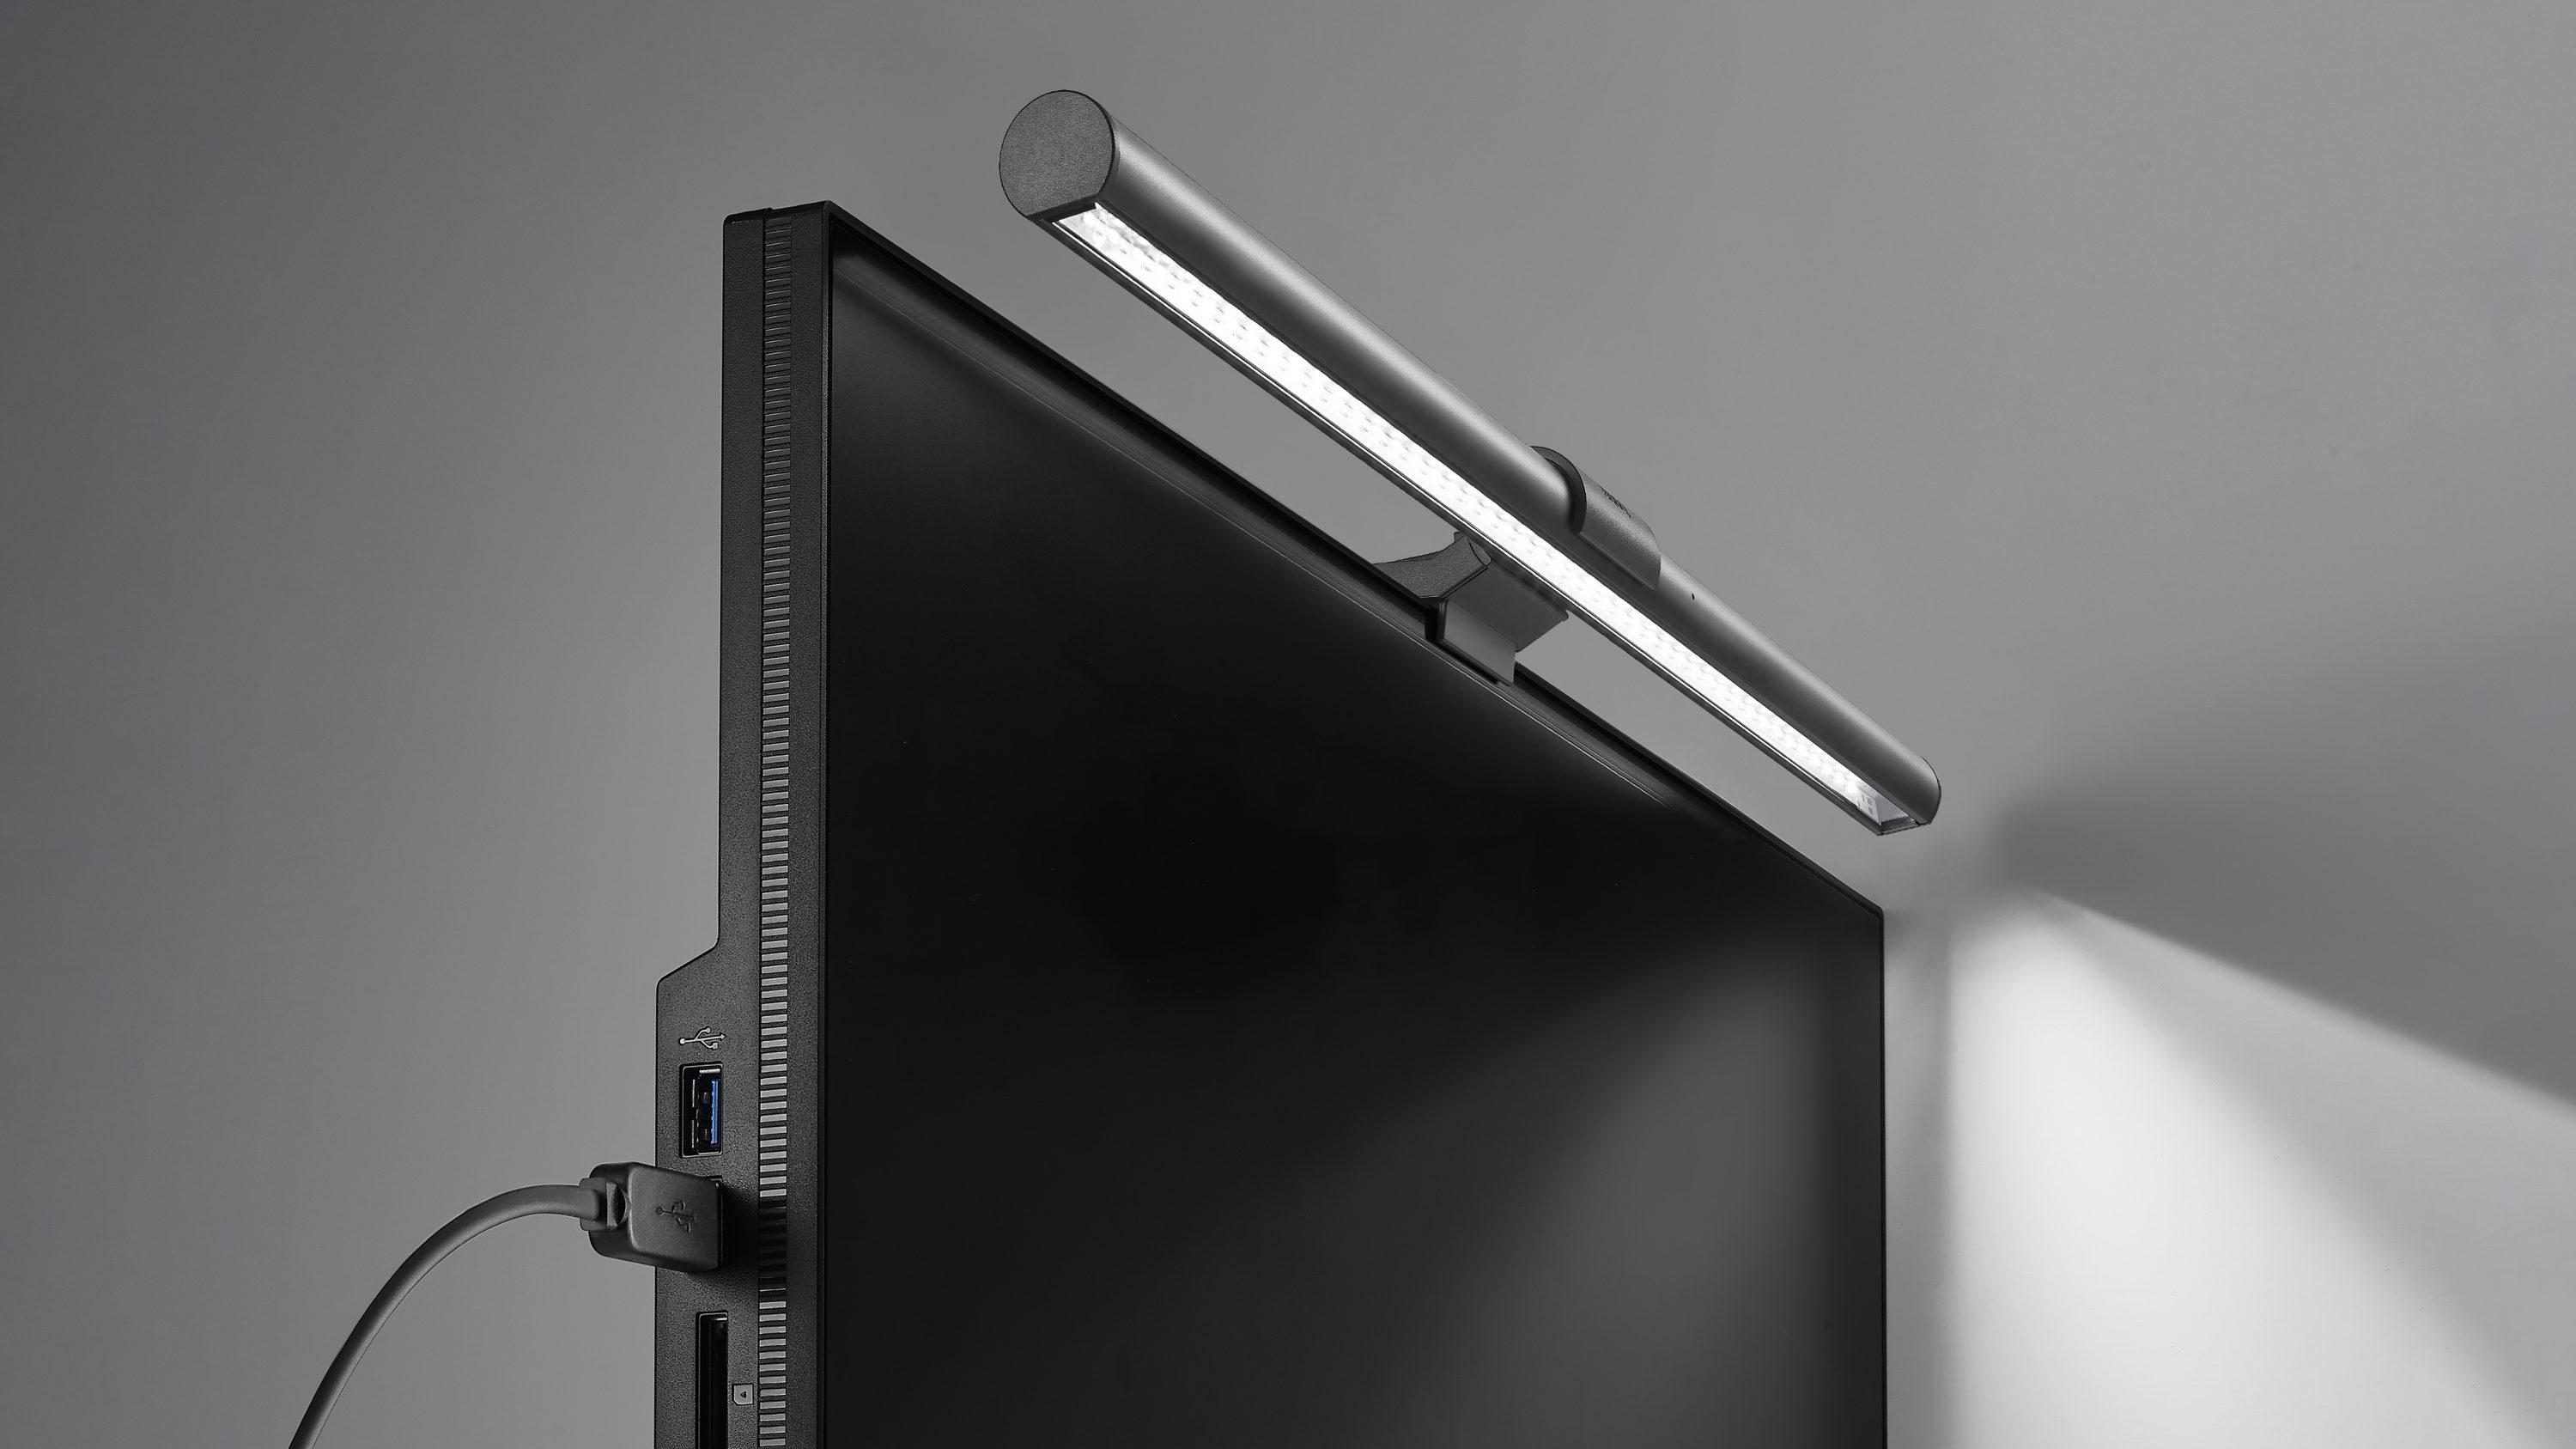 BenQ introduces ScreenBar monitor lights that can “reduce 